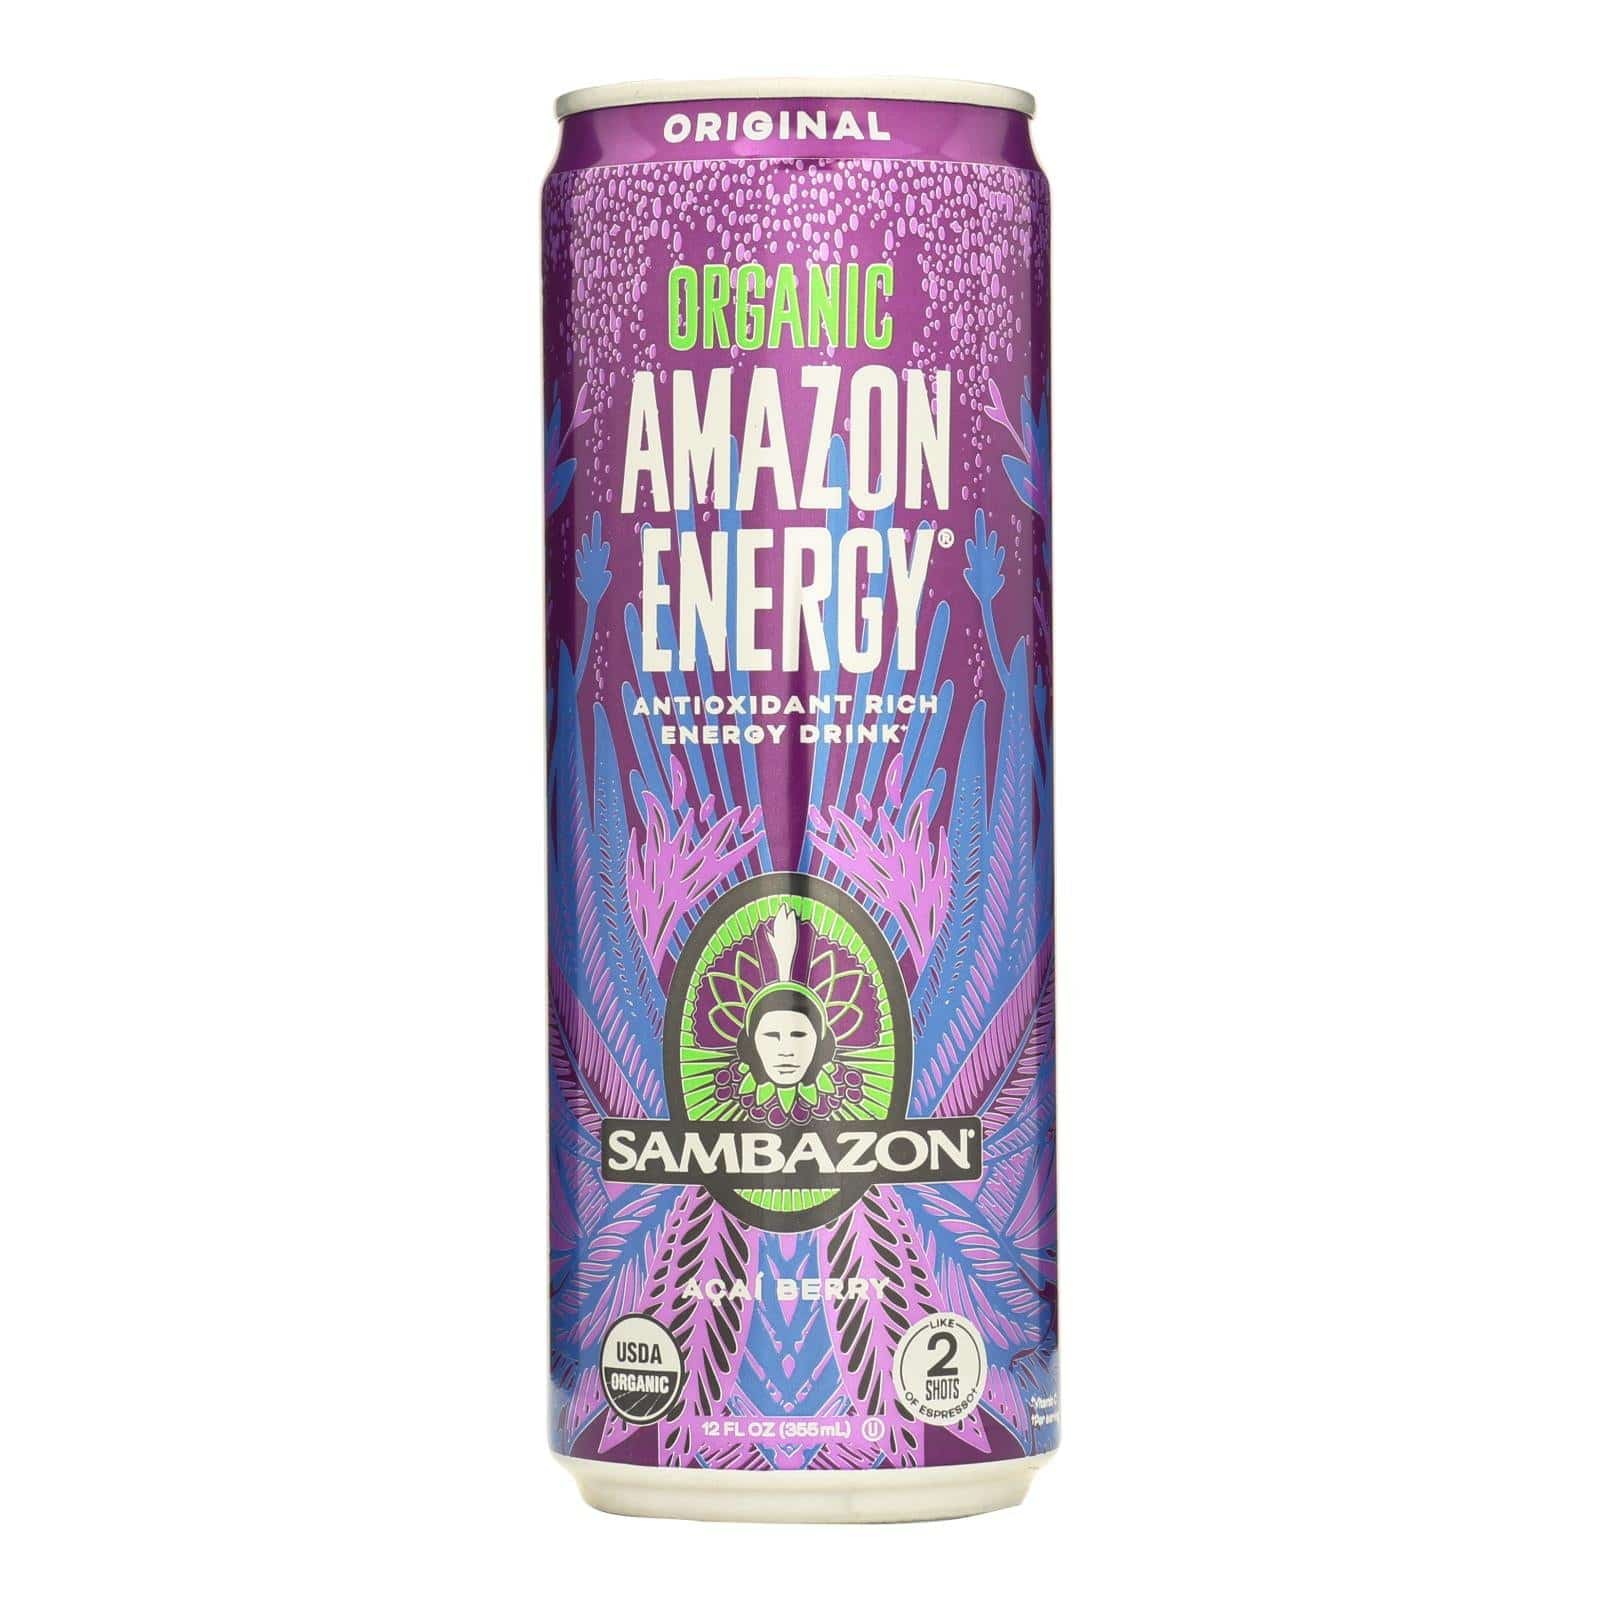 Buy Sambazon Organic Amazon Energy Drink - Original - Case Of 12 - 12 Fl Oz  at OnlyNaturals.us